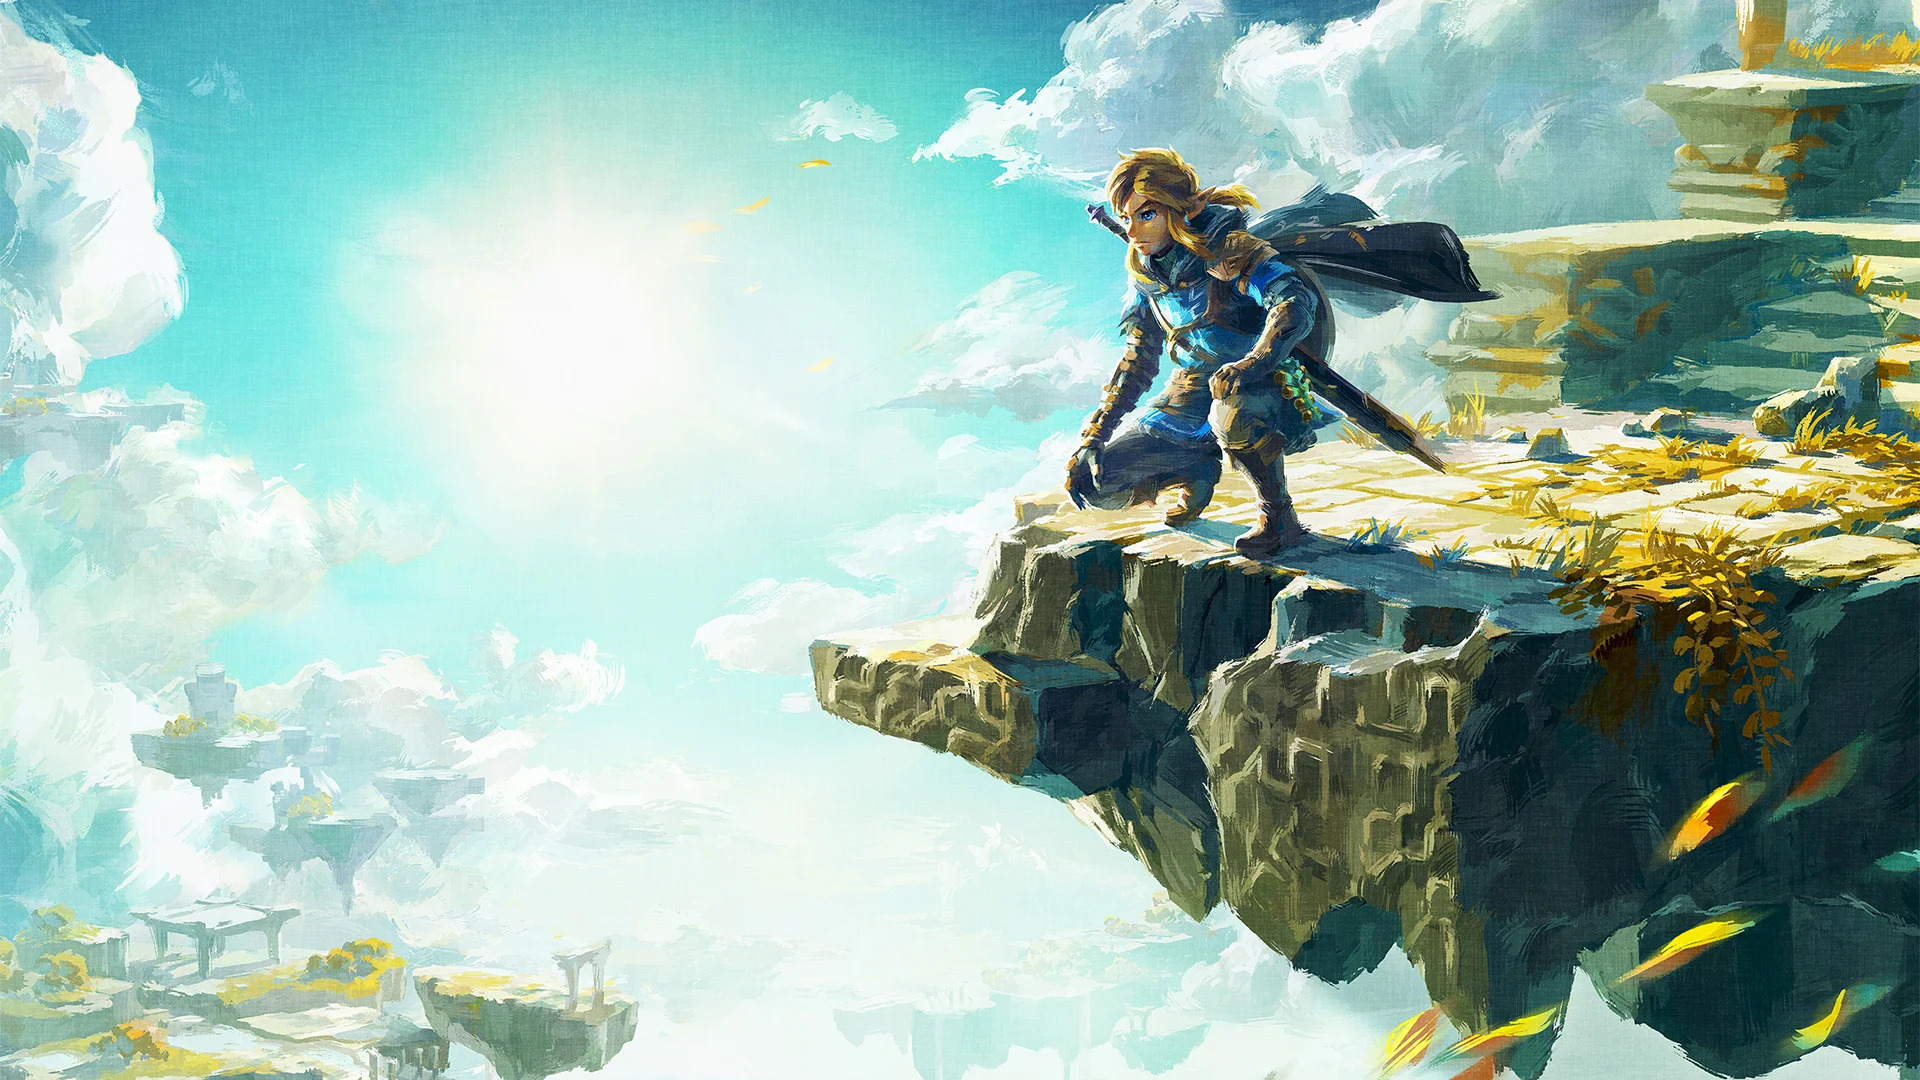 Nintendo Announces “Zelda” Film